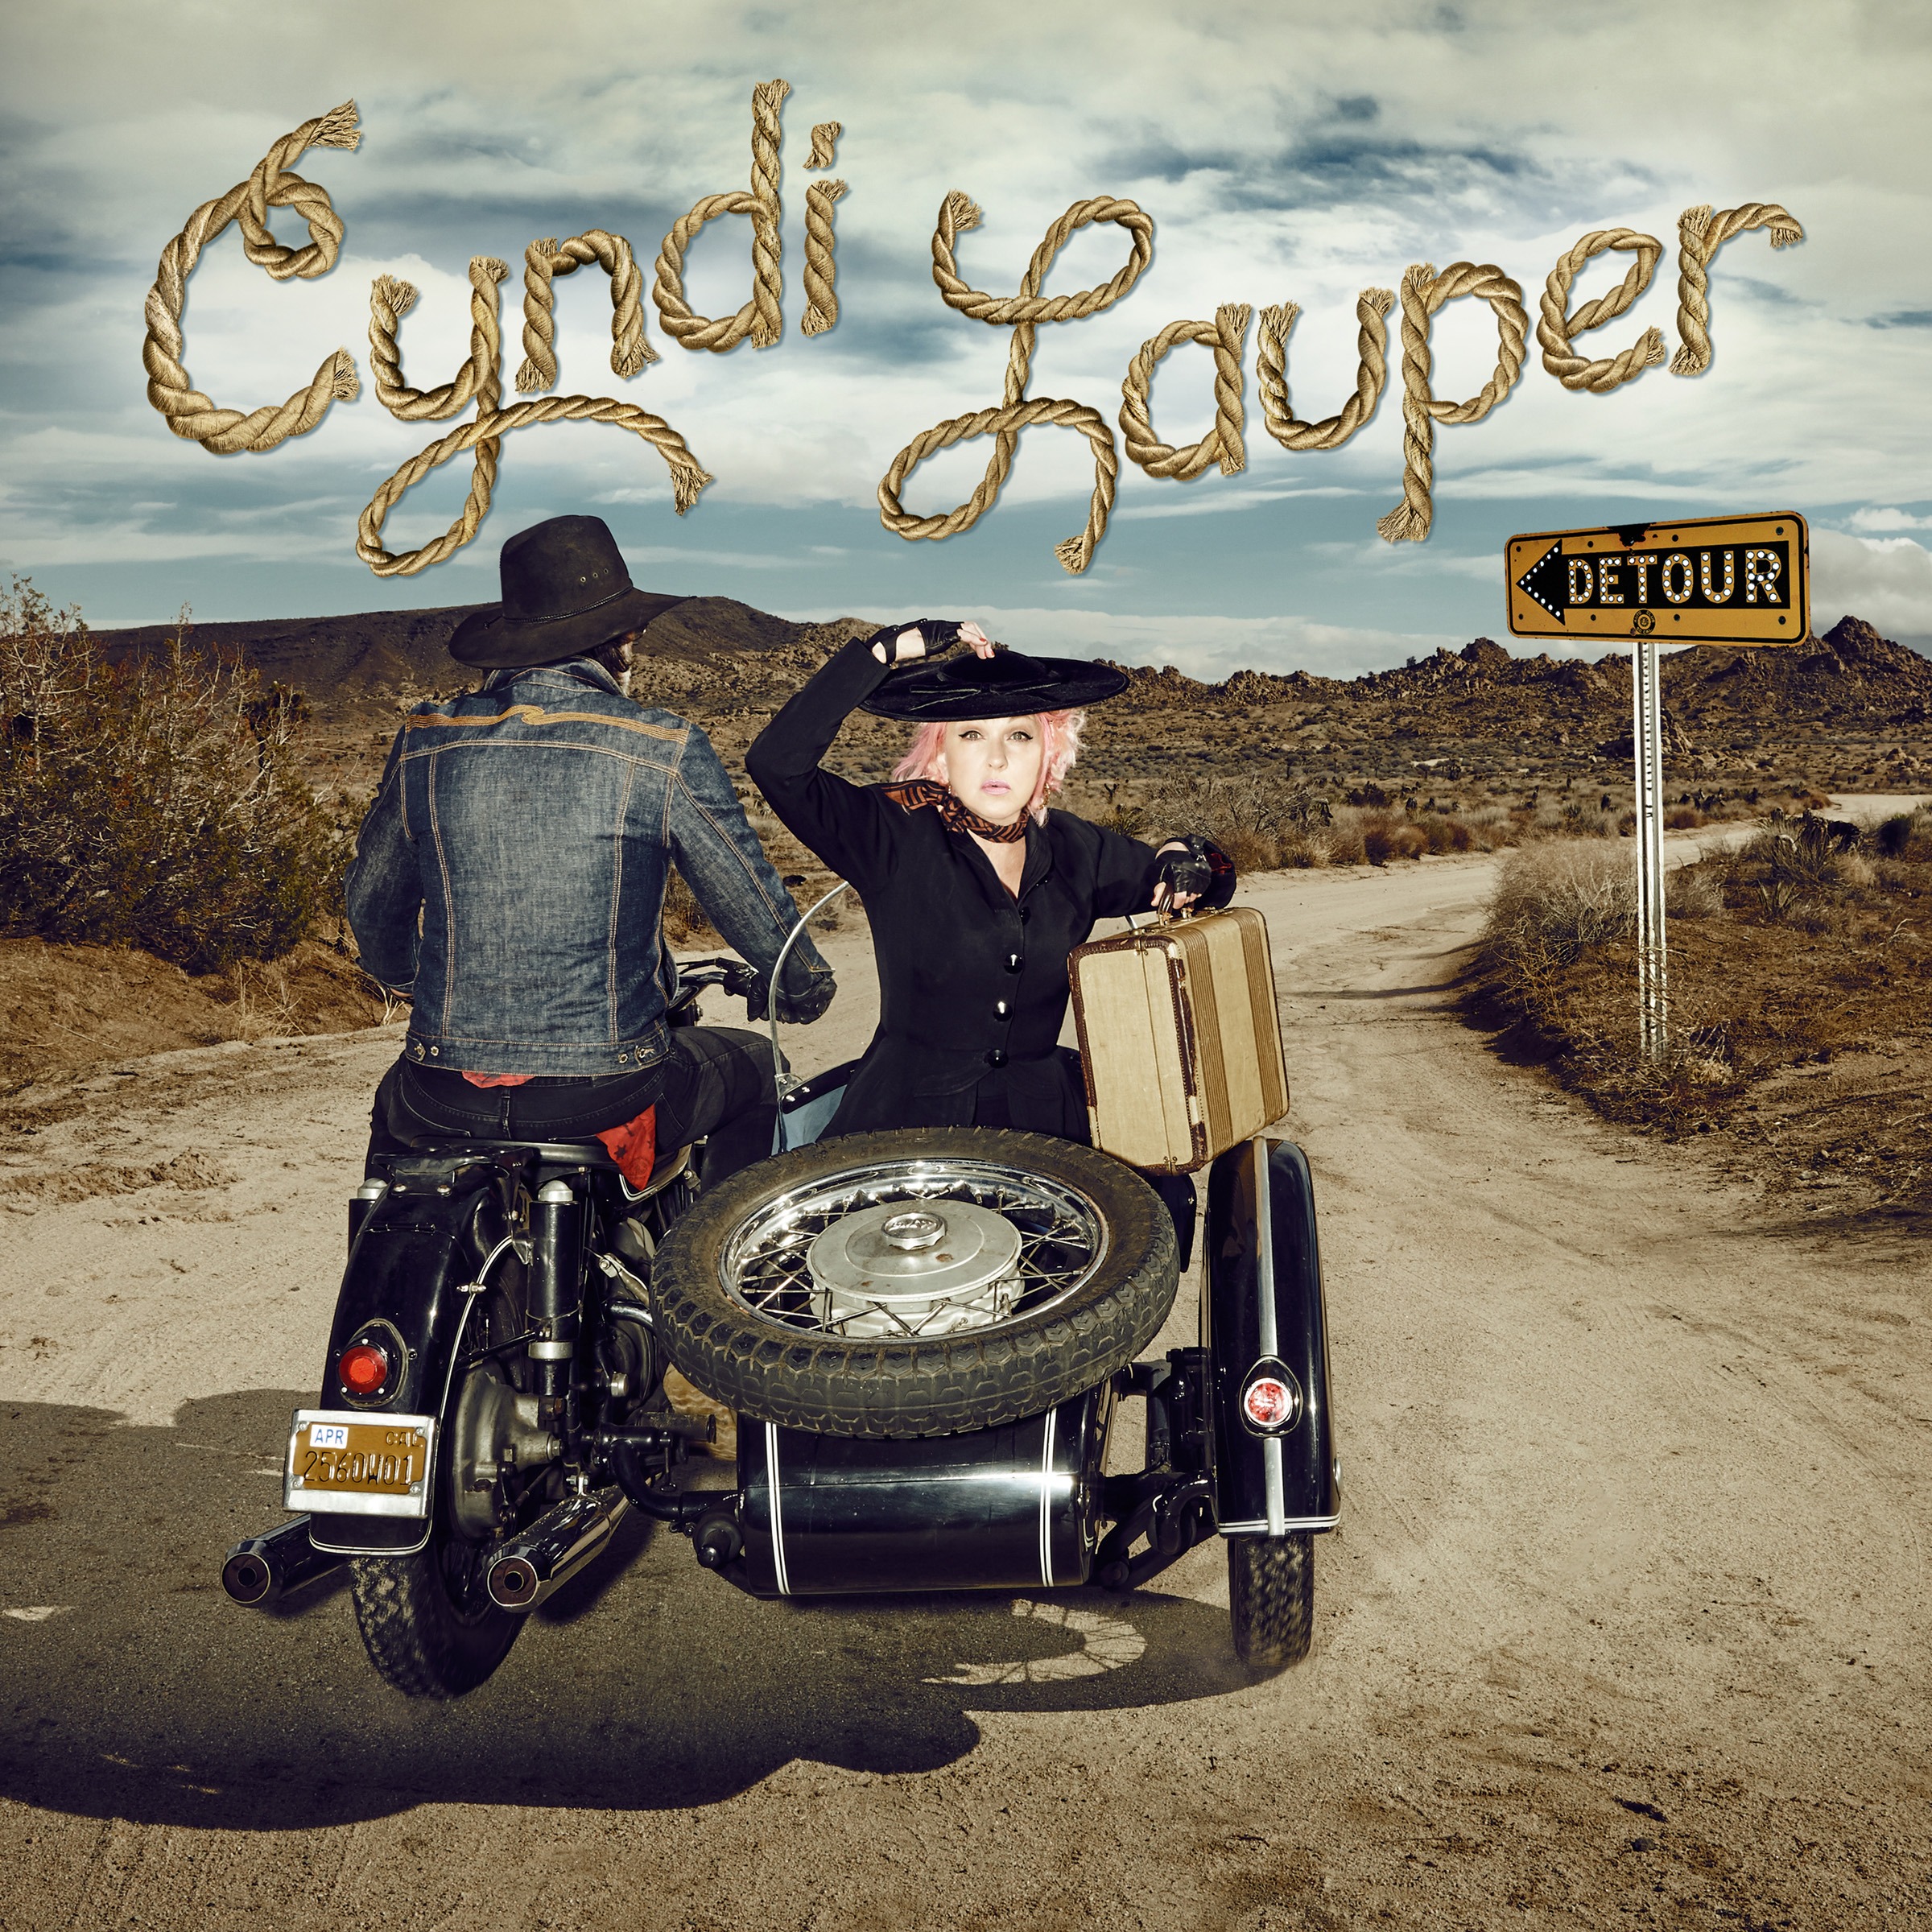 Cyndi Lauper Debuts On "Austin City Limits" This Saturday, January 14 on PBS